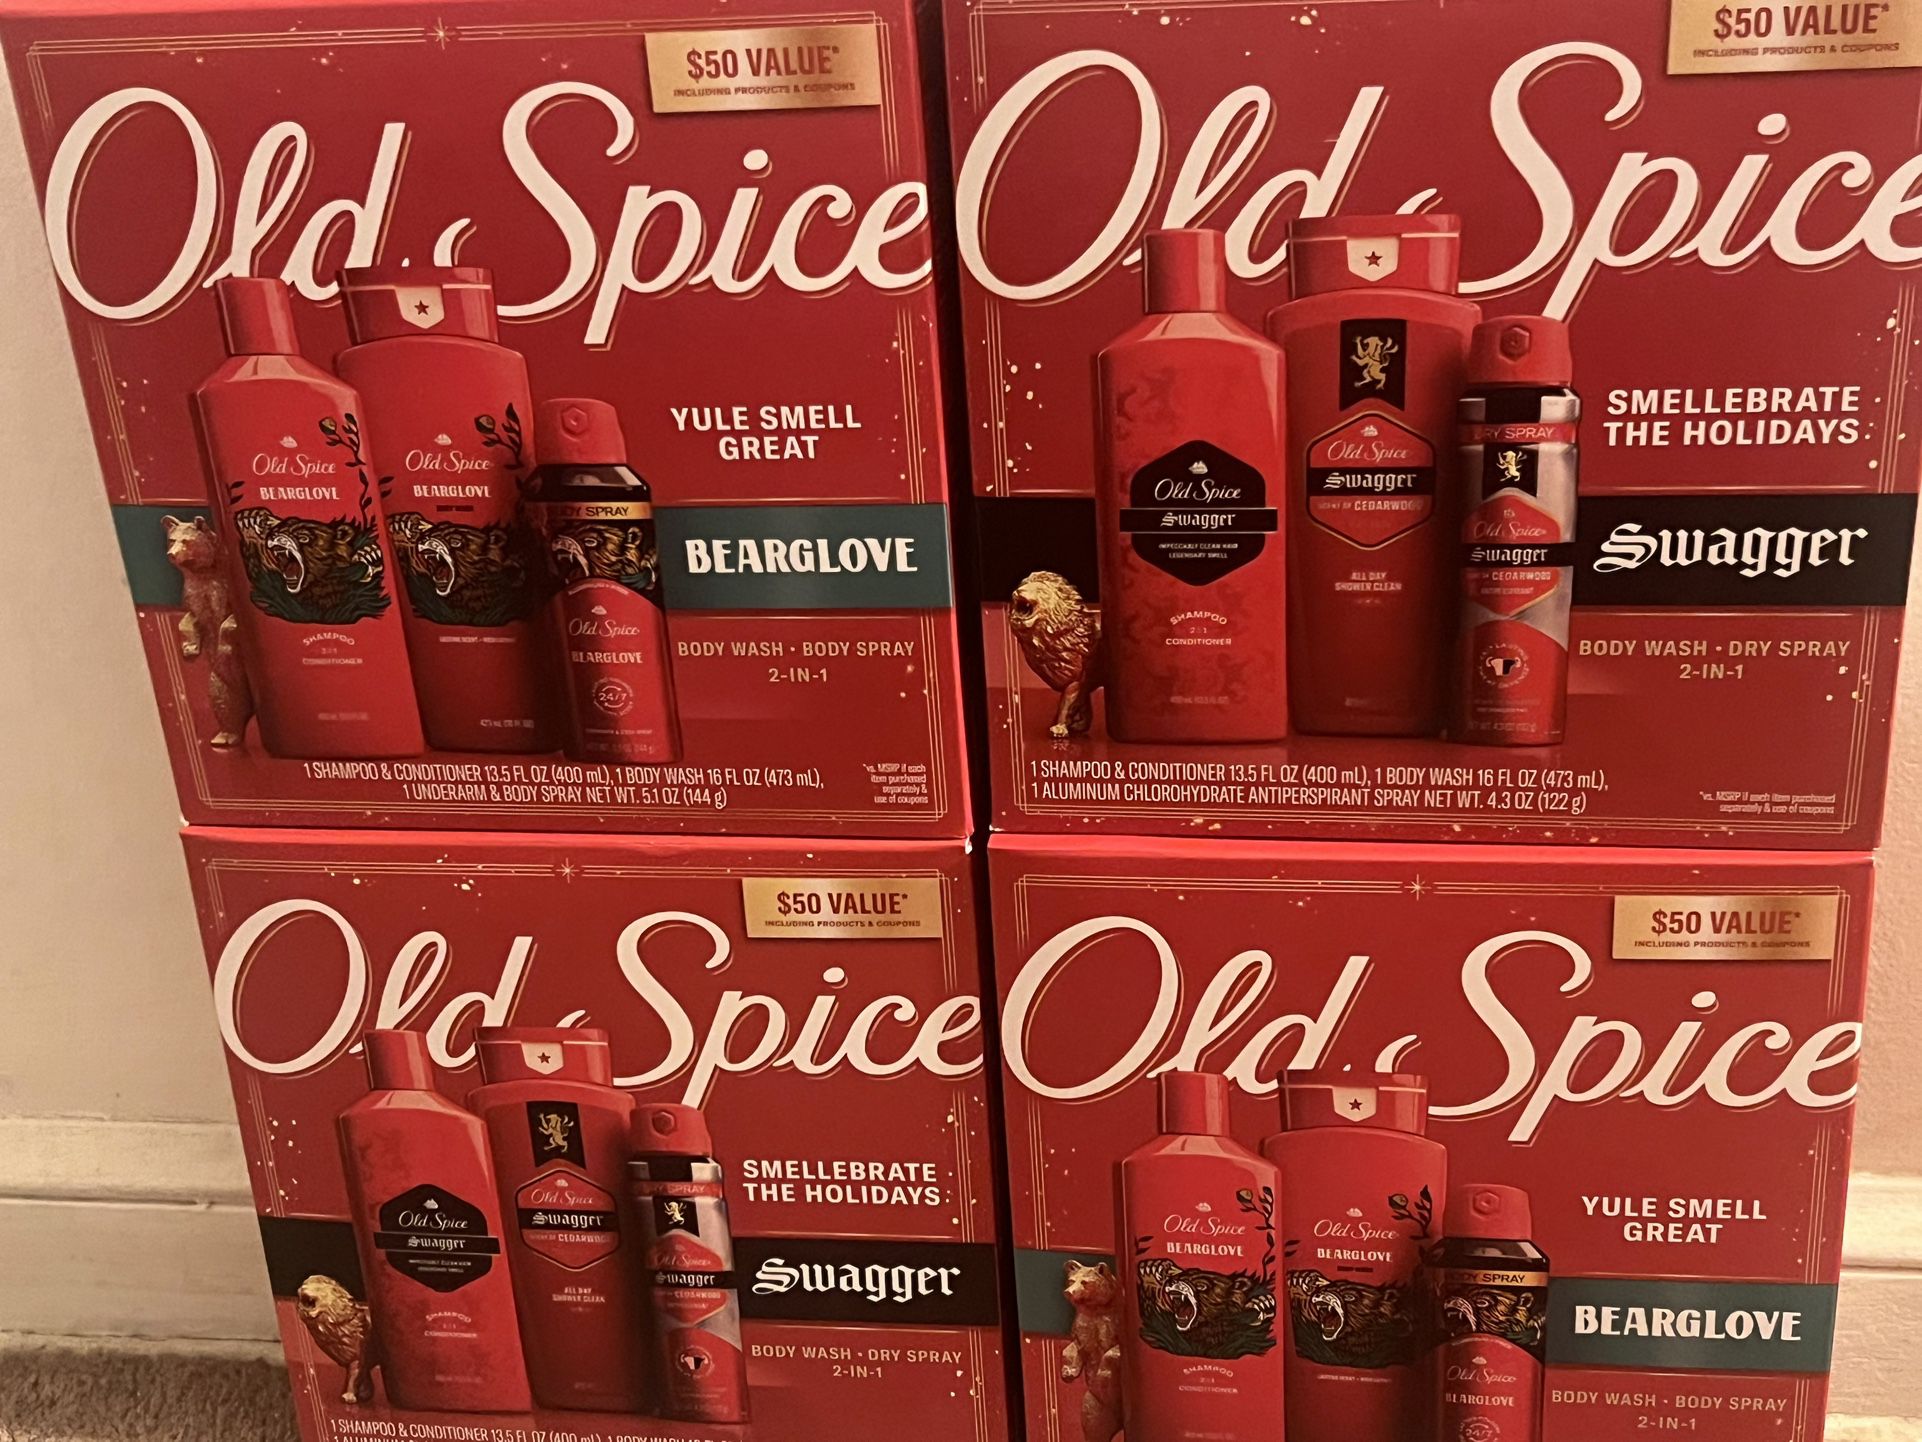 Old Spice Gift Set $10 